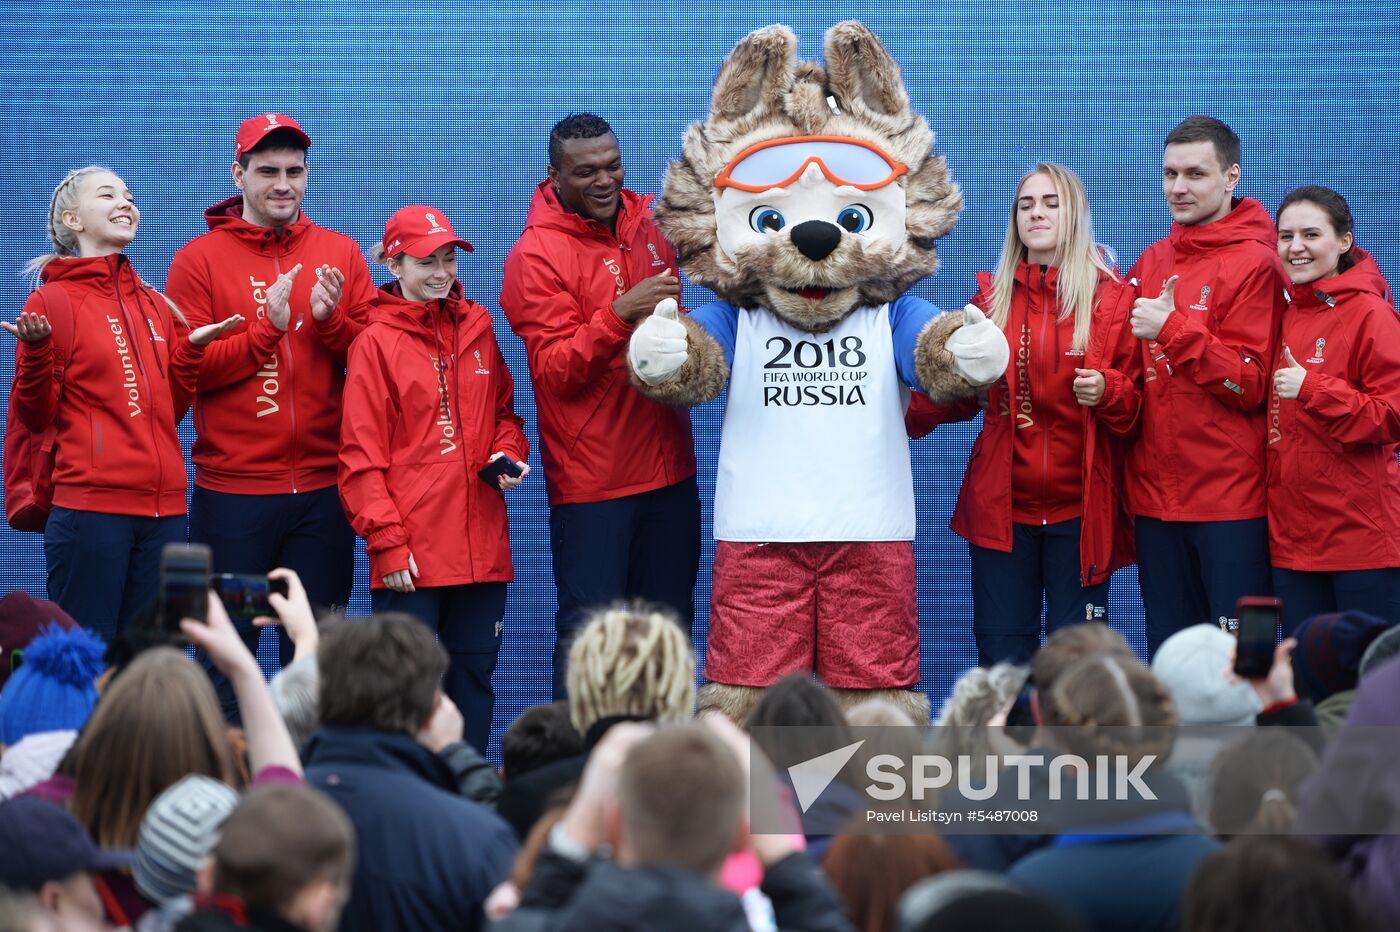 Yekaterinburg presents 2018 World Cup volunteer uniform at Football Park